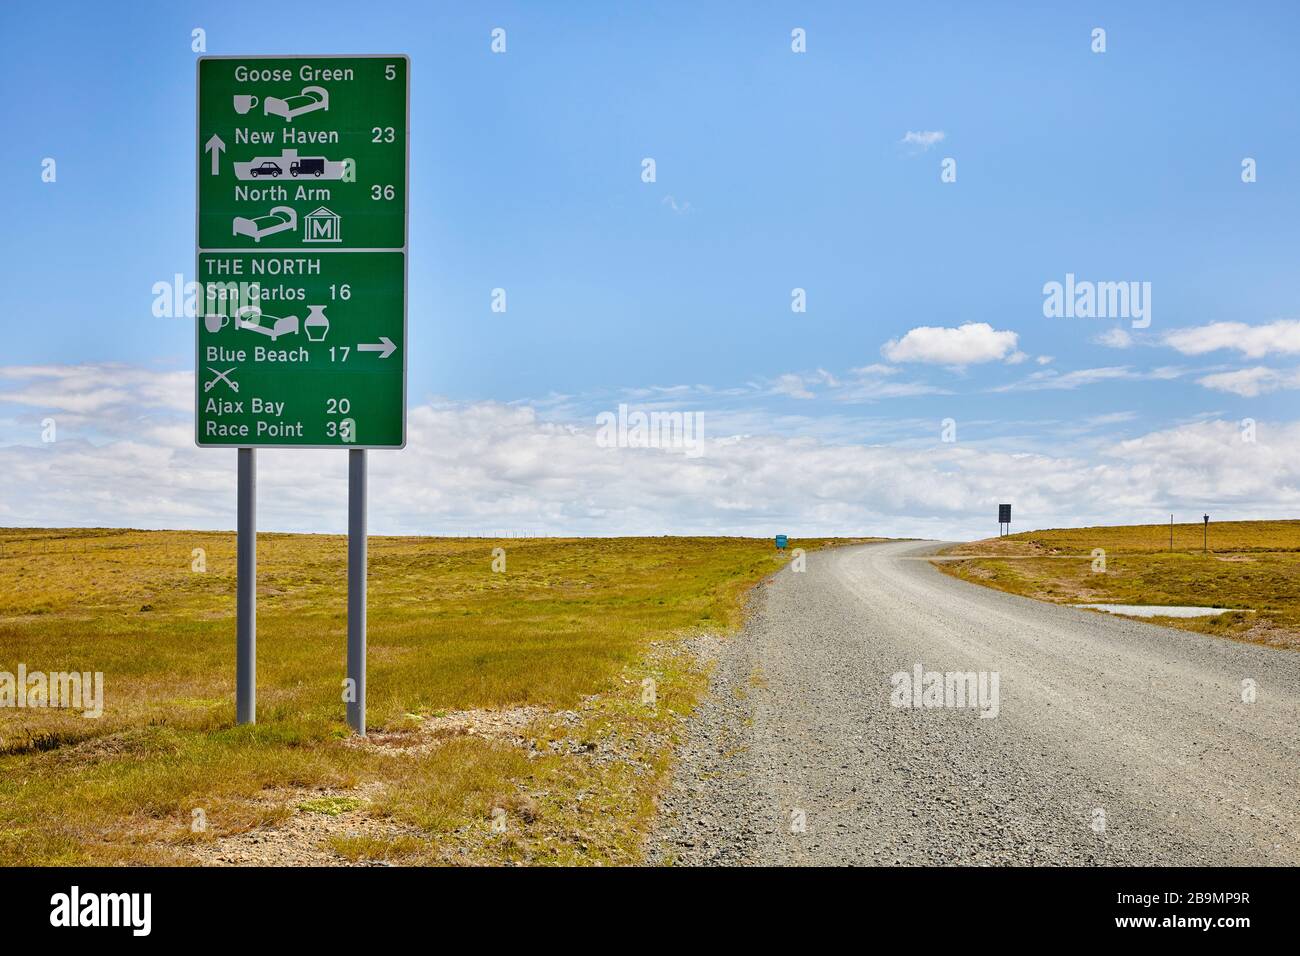 Goose Green, New Haven, North Arm, San Carlos, Blue Beach, Ajax Bay, Race Point, Darwin, Road Sign, Falkland Islands, East Falkland, Falklands Stock Photo